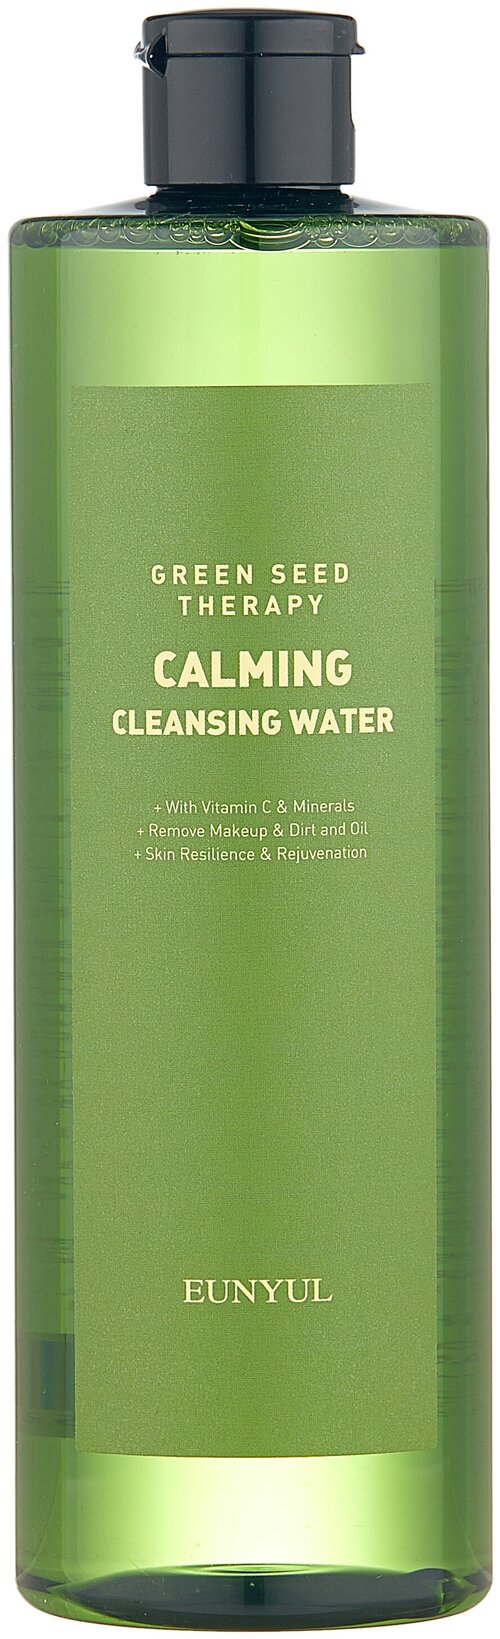 Eunyul успокаивающая мицеллярная вода с экстрактами зеленых плодов Green Seed Therapy Calming Cleansing Water, 500 мл, 542 г